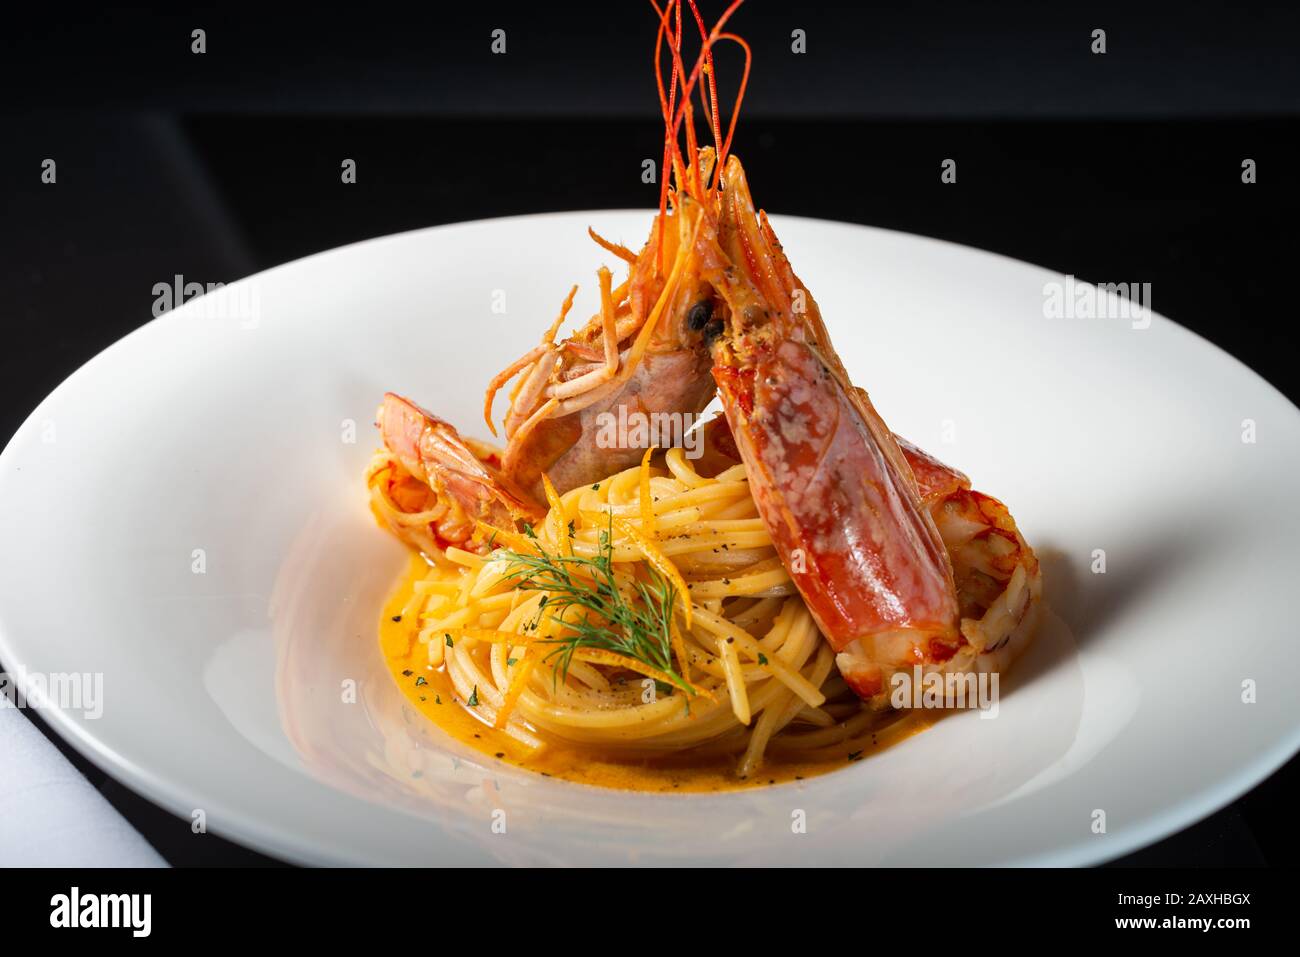 Tiger Prawn Pasta gourmet dish on black background Stock Photo - Alamy